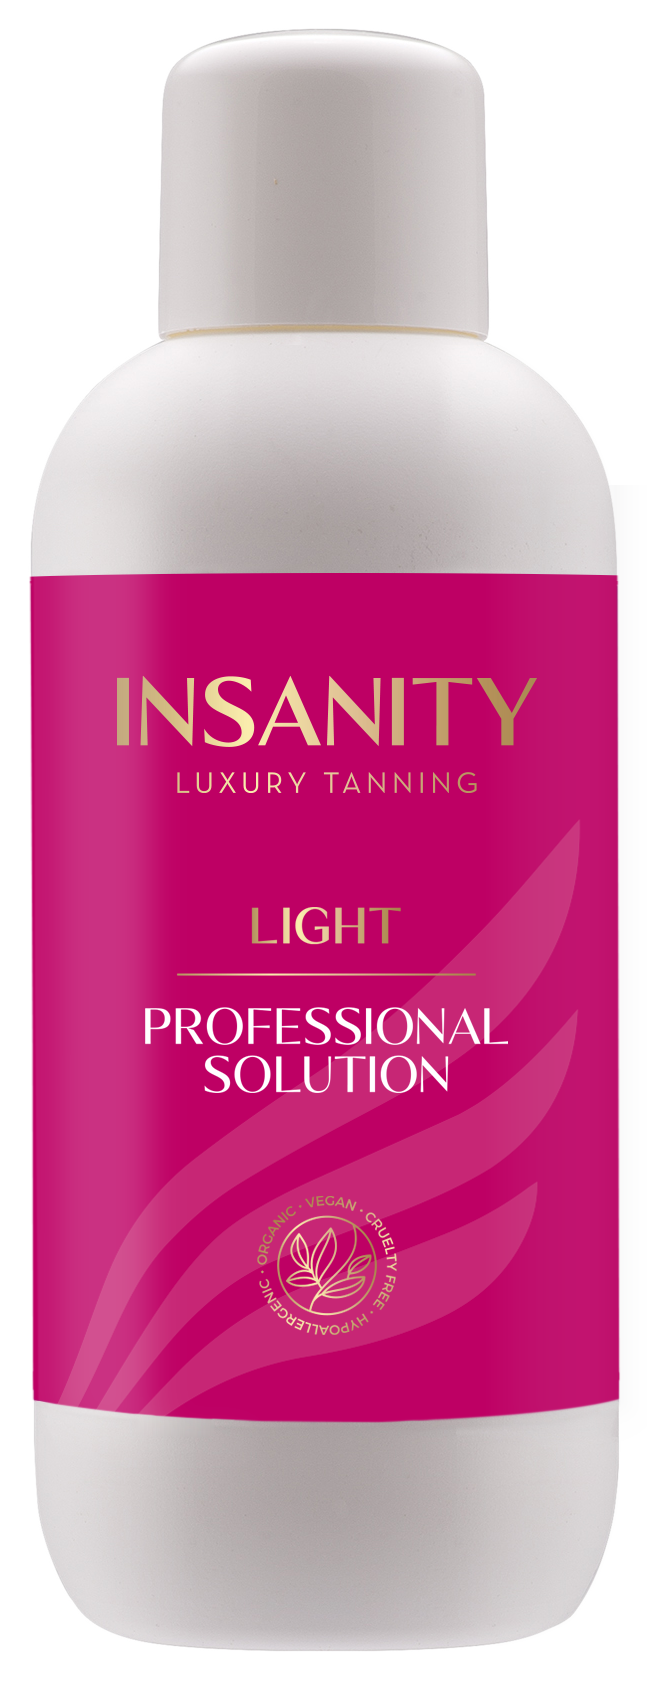 Insanity Professional Solution - Light